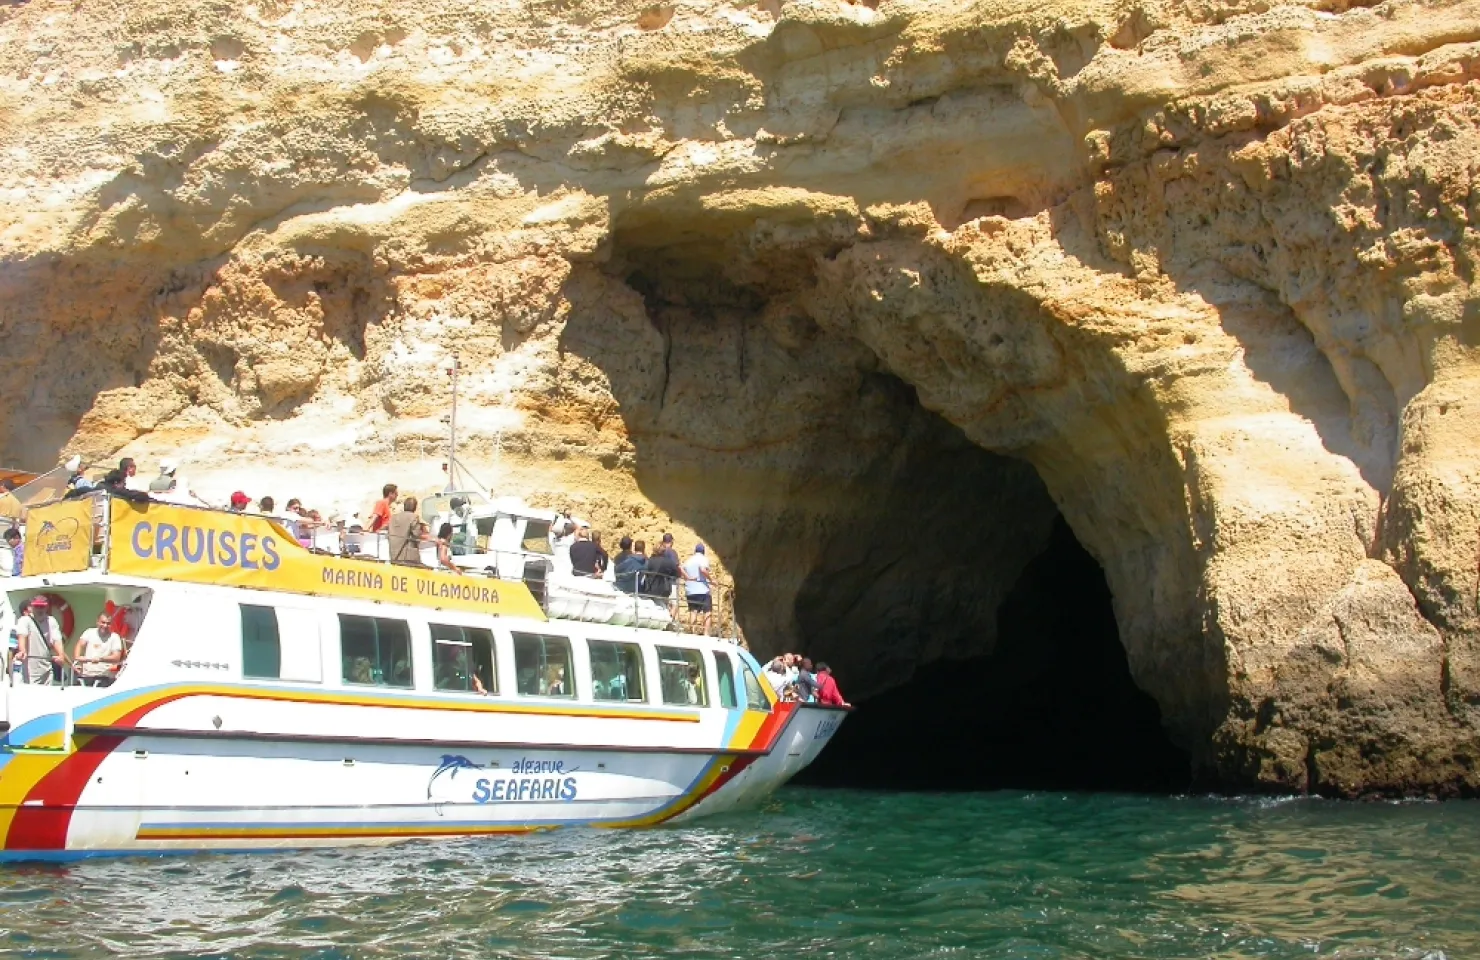 Algarve Sea Cave Tour - fun boat trip algarve